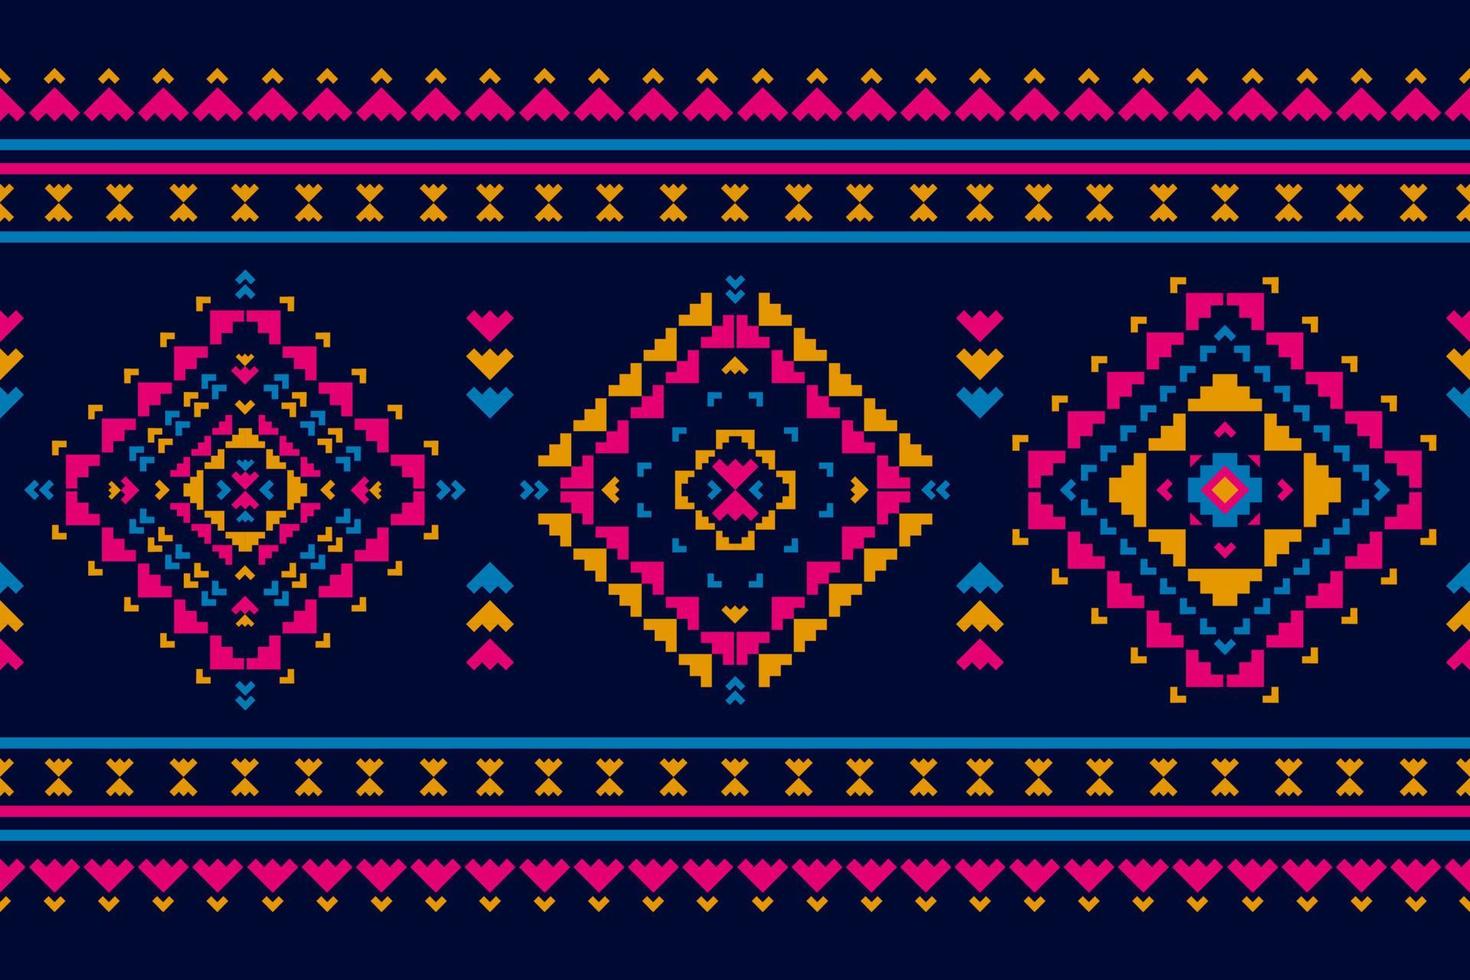 matta etnisk stam- mönster konst. geometrisk etnisk sömlös mönster i stam. mexikansk stil. vektor